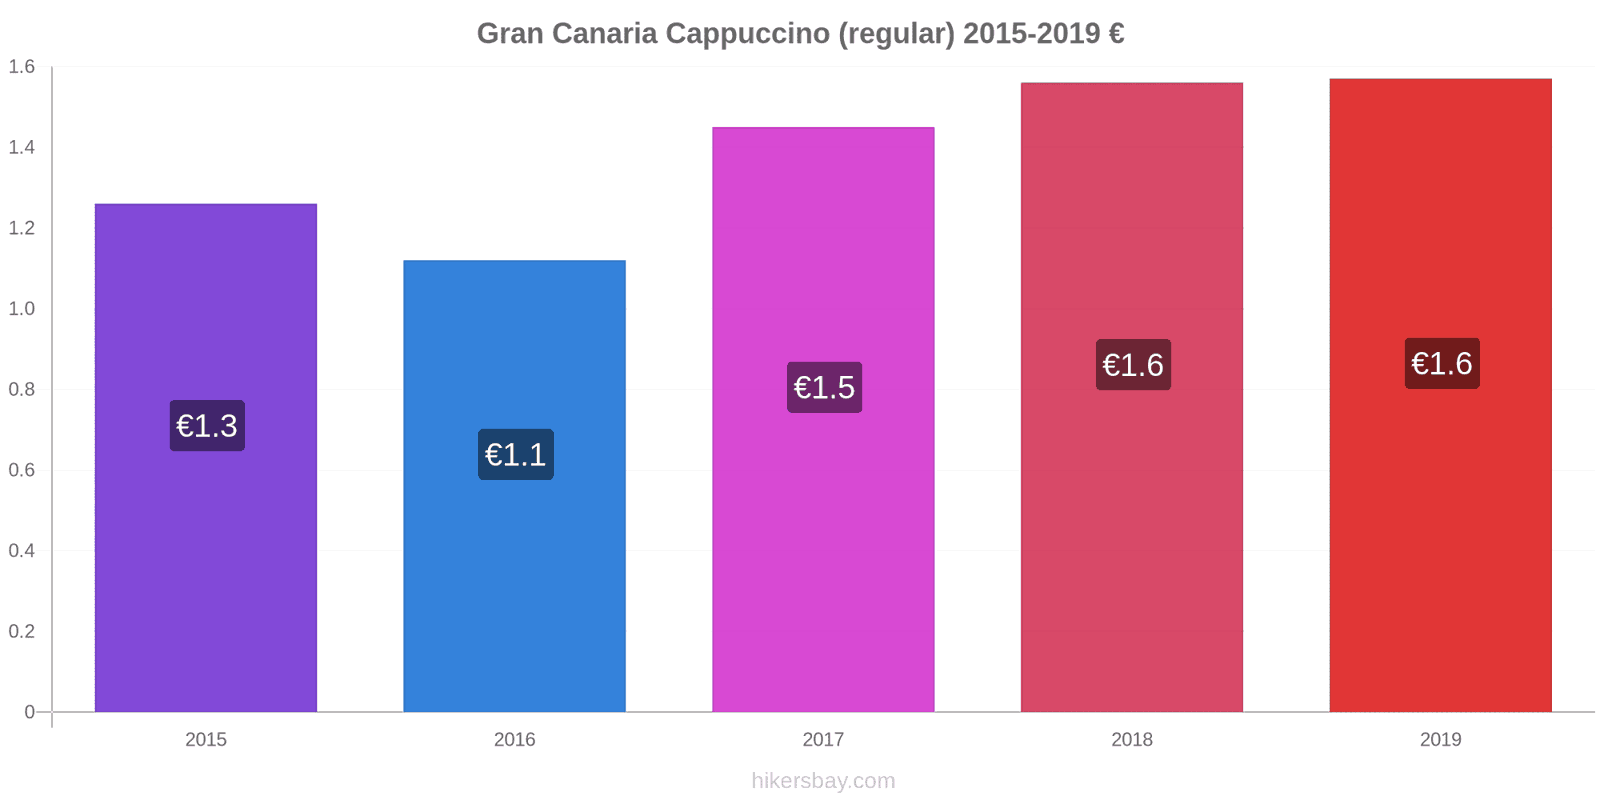 Gran Canaria price changes Cappuccino (regular) hikersbay.com